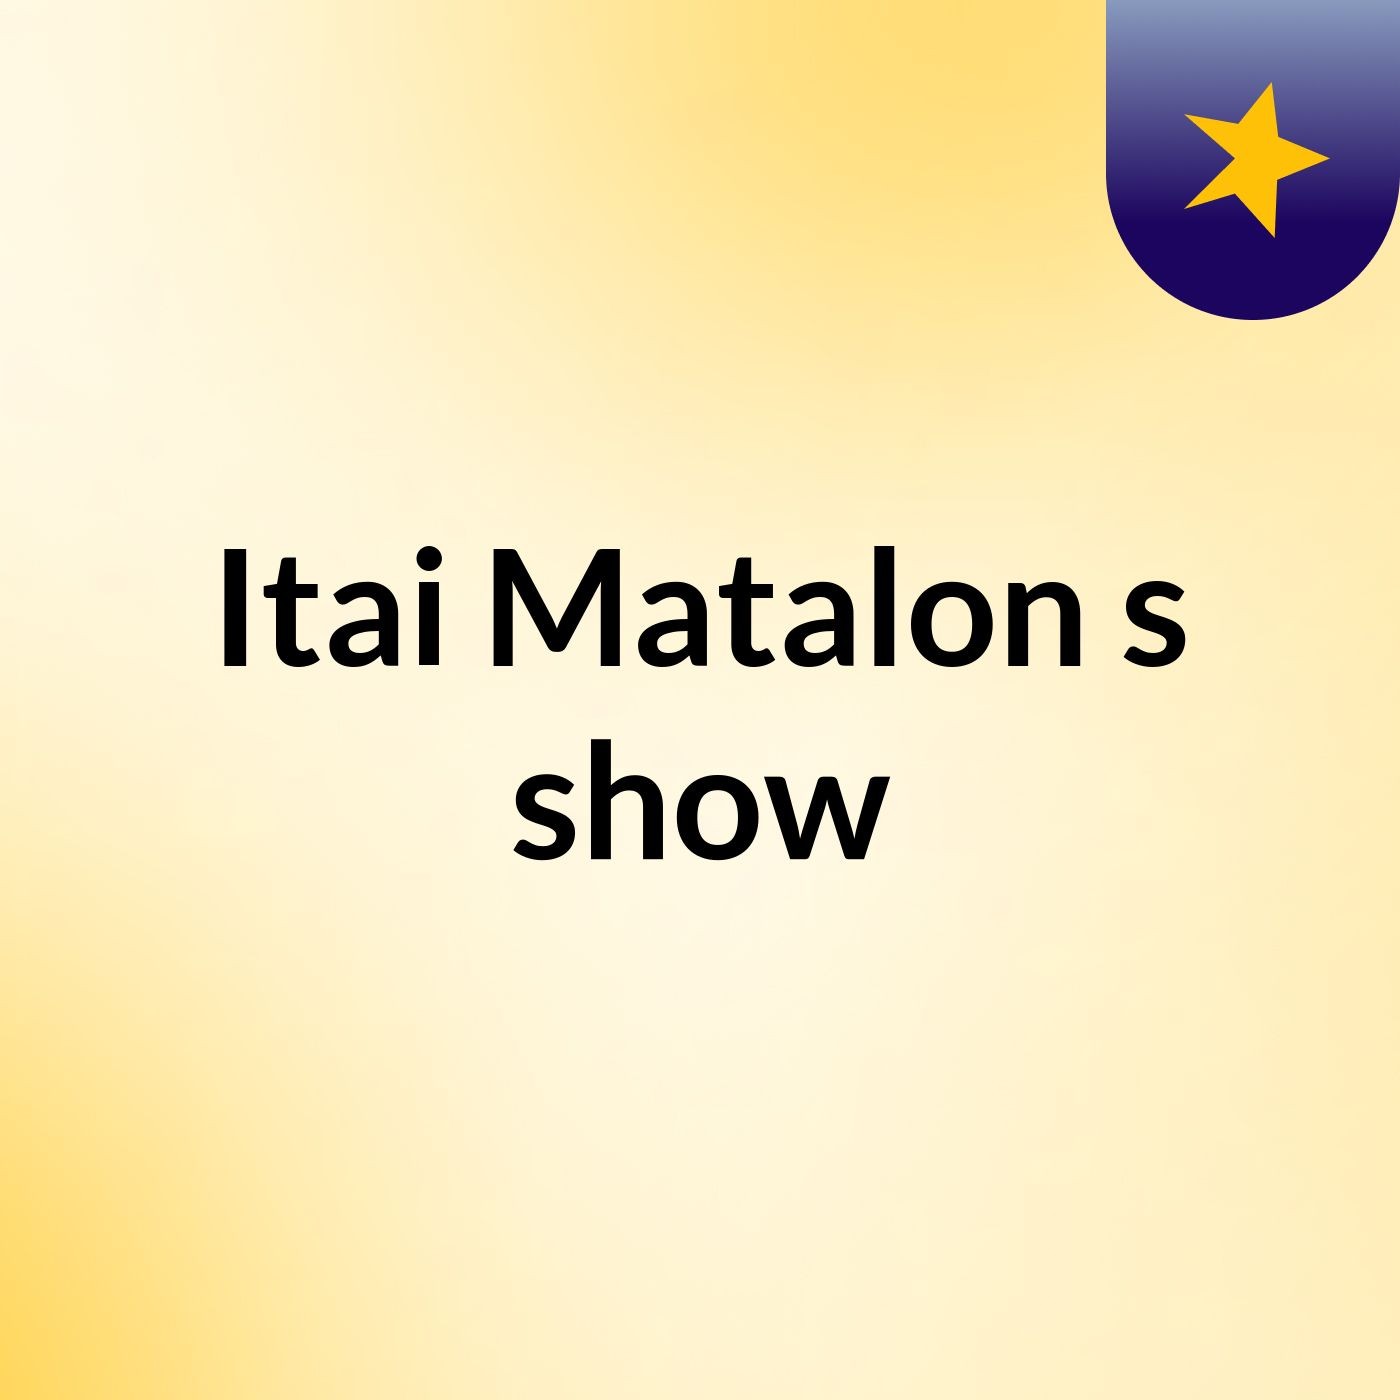 Itai Matalon's show